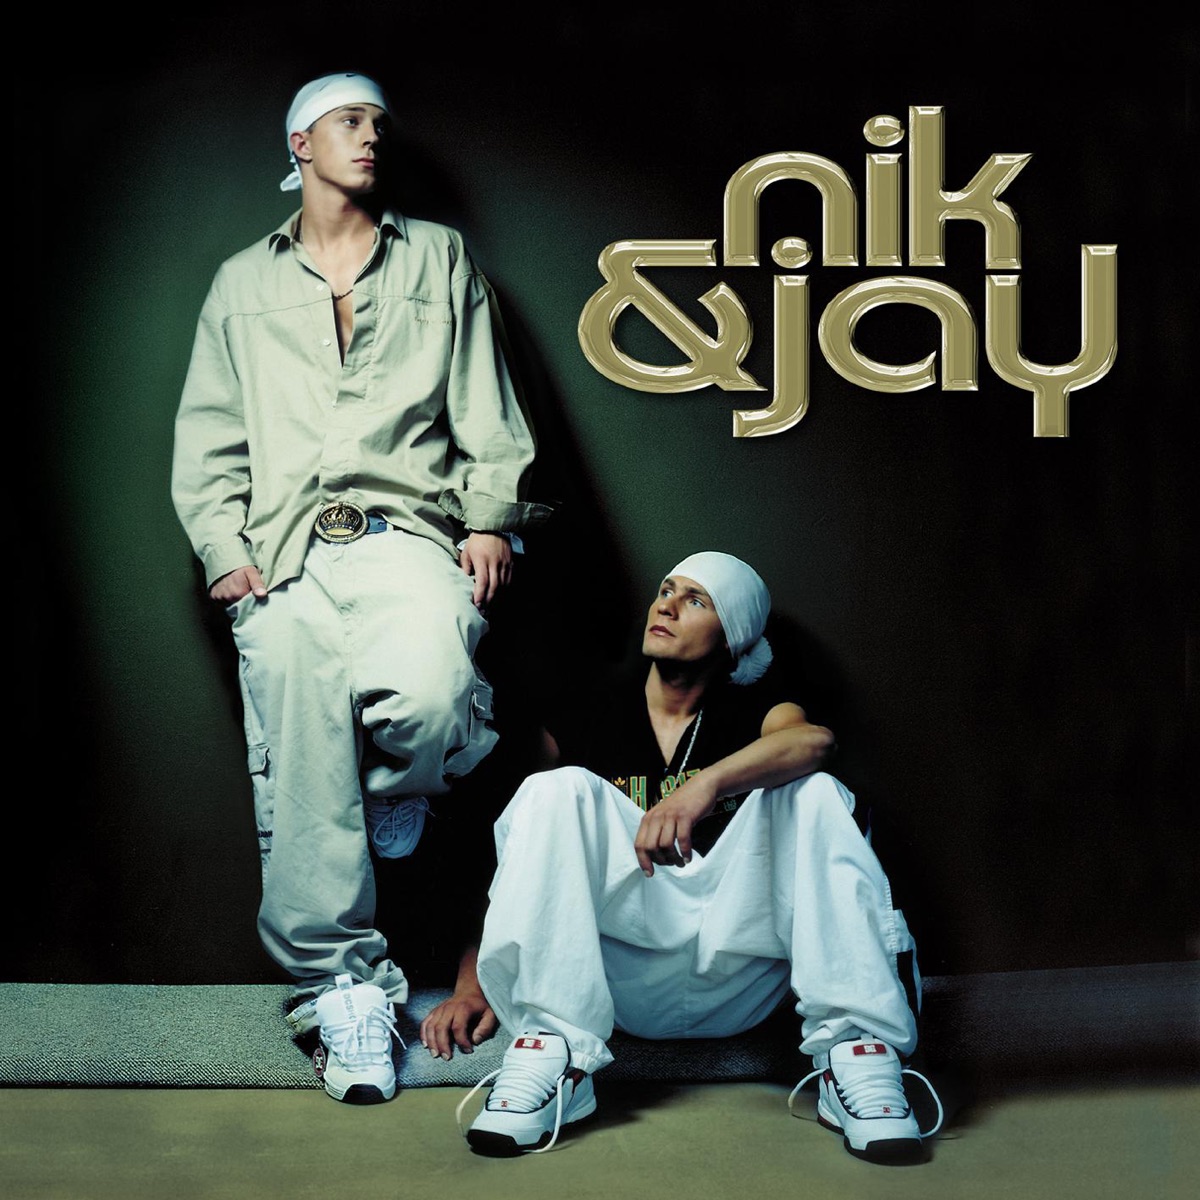 Nik Jay by Nik on Apple Music